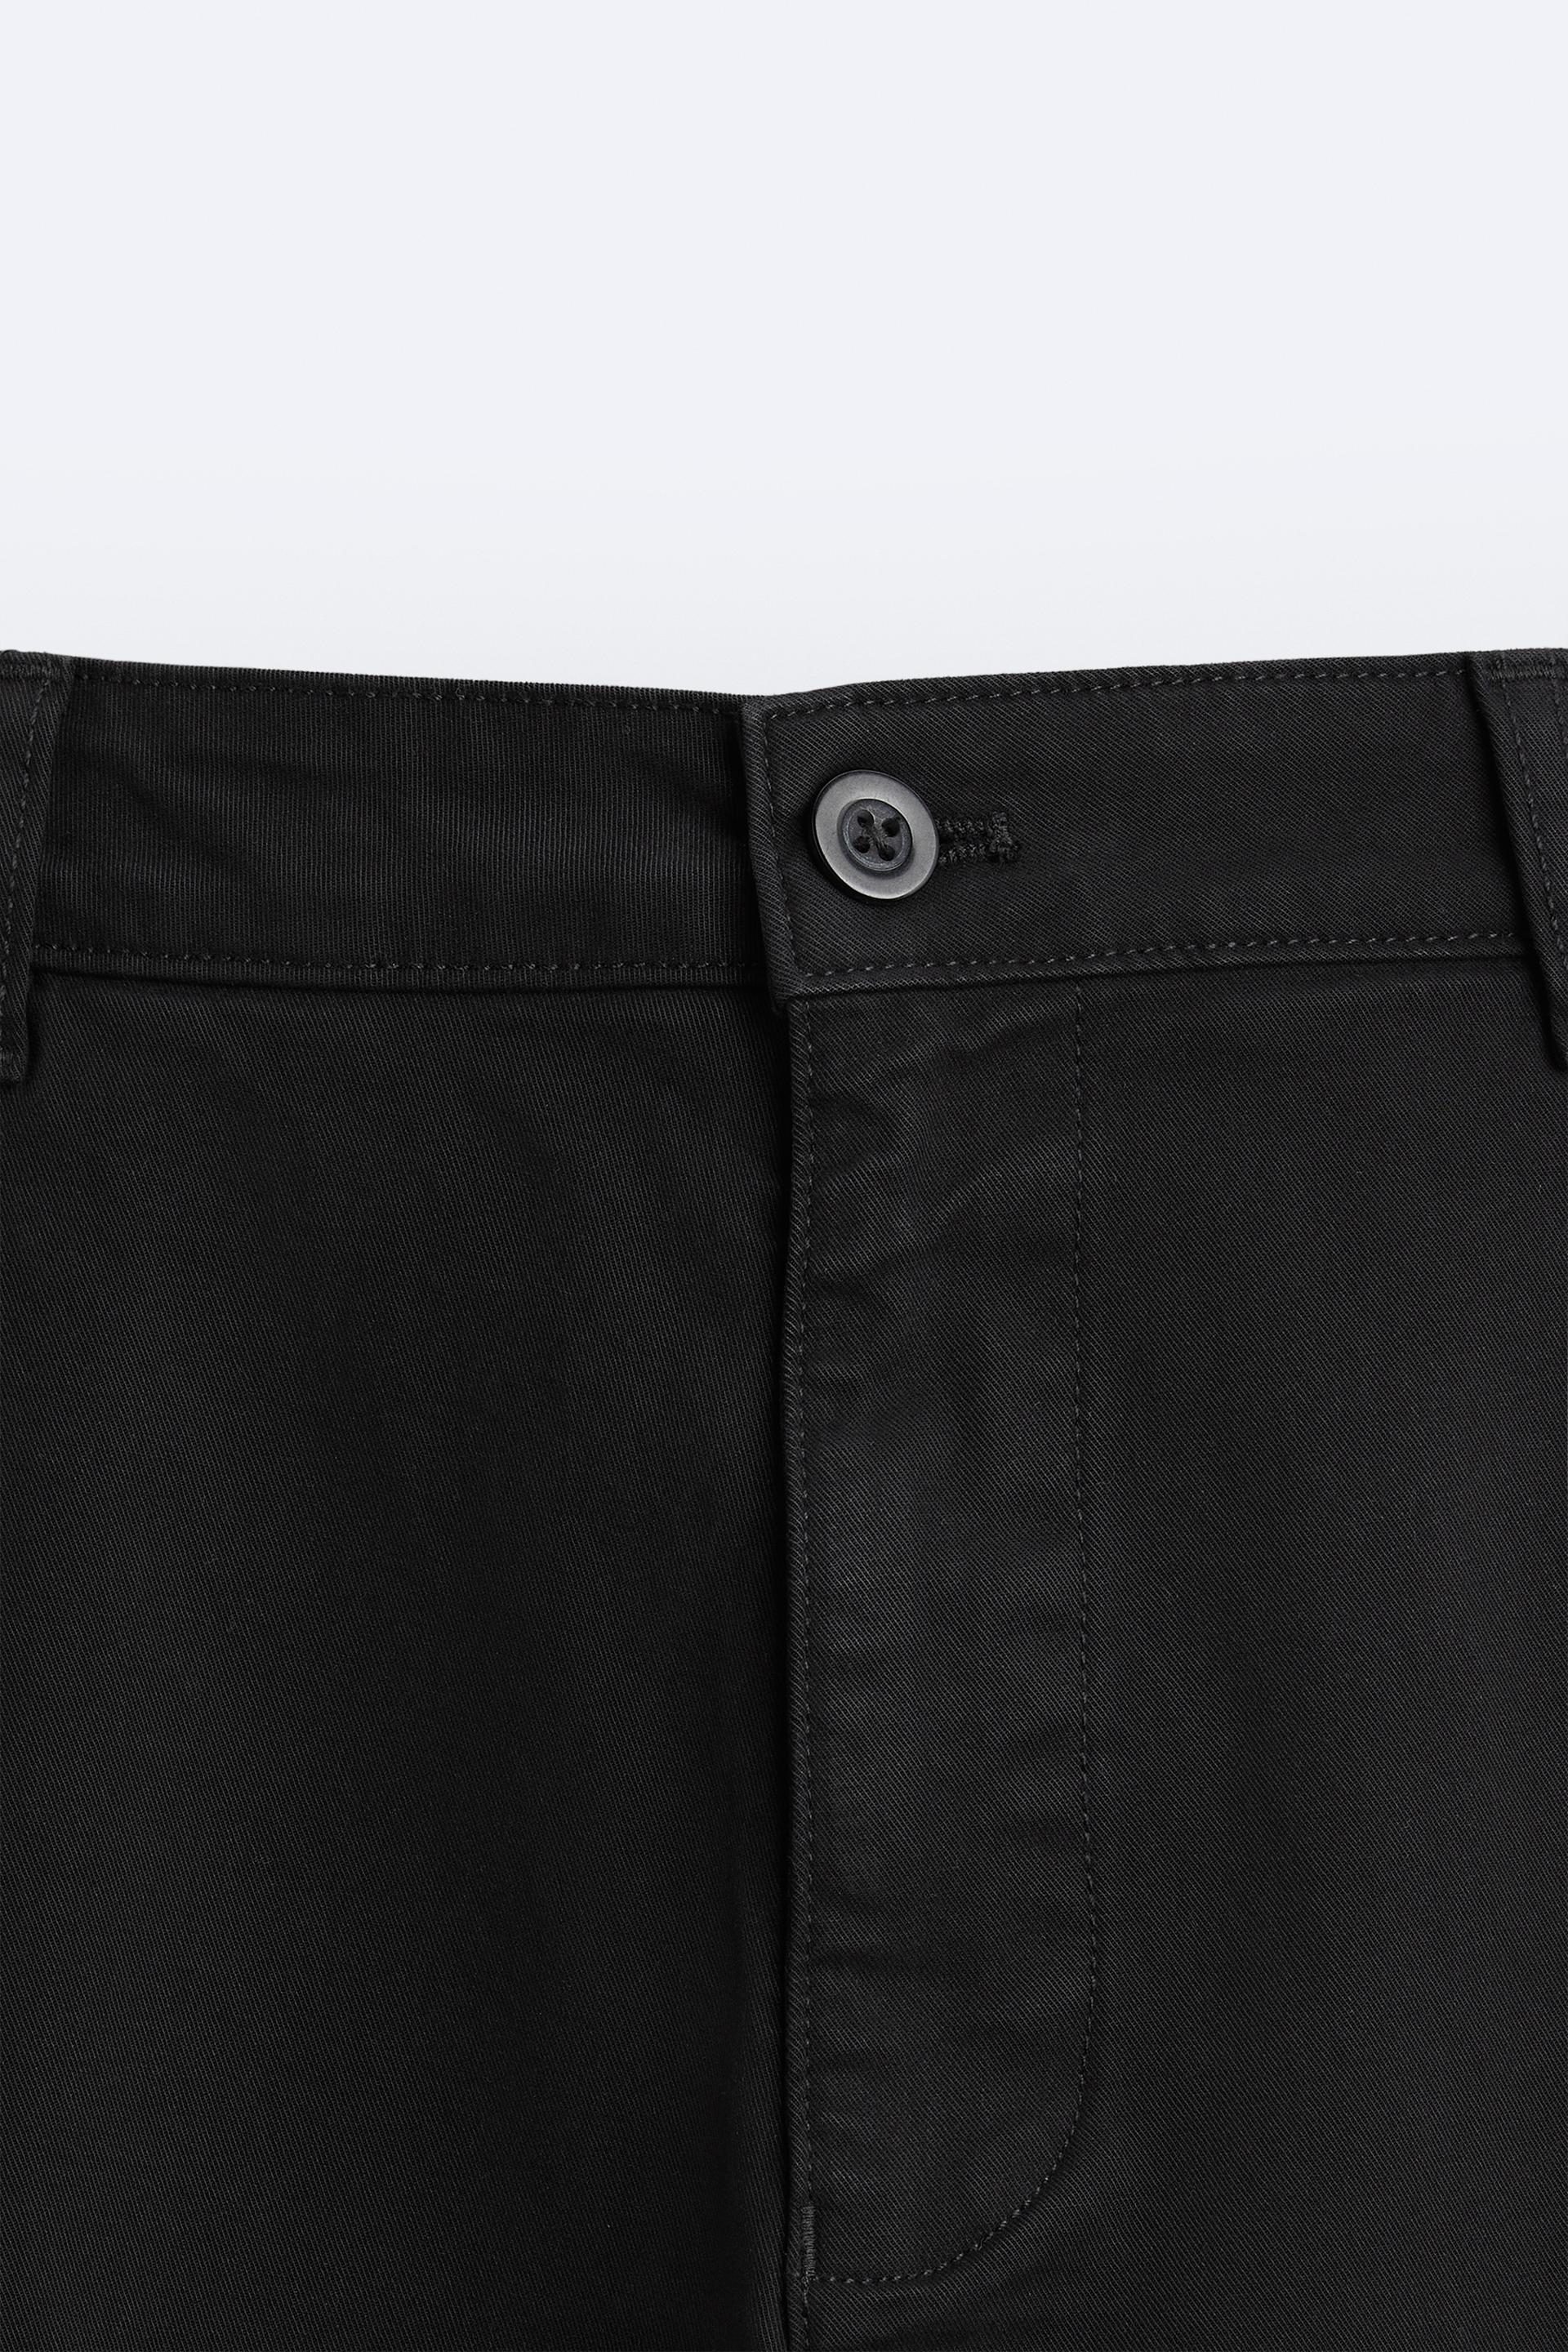 Zara Pantalons Chino Femme De Couleur Noir 1881921-noir00 - Modz